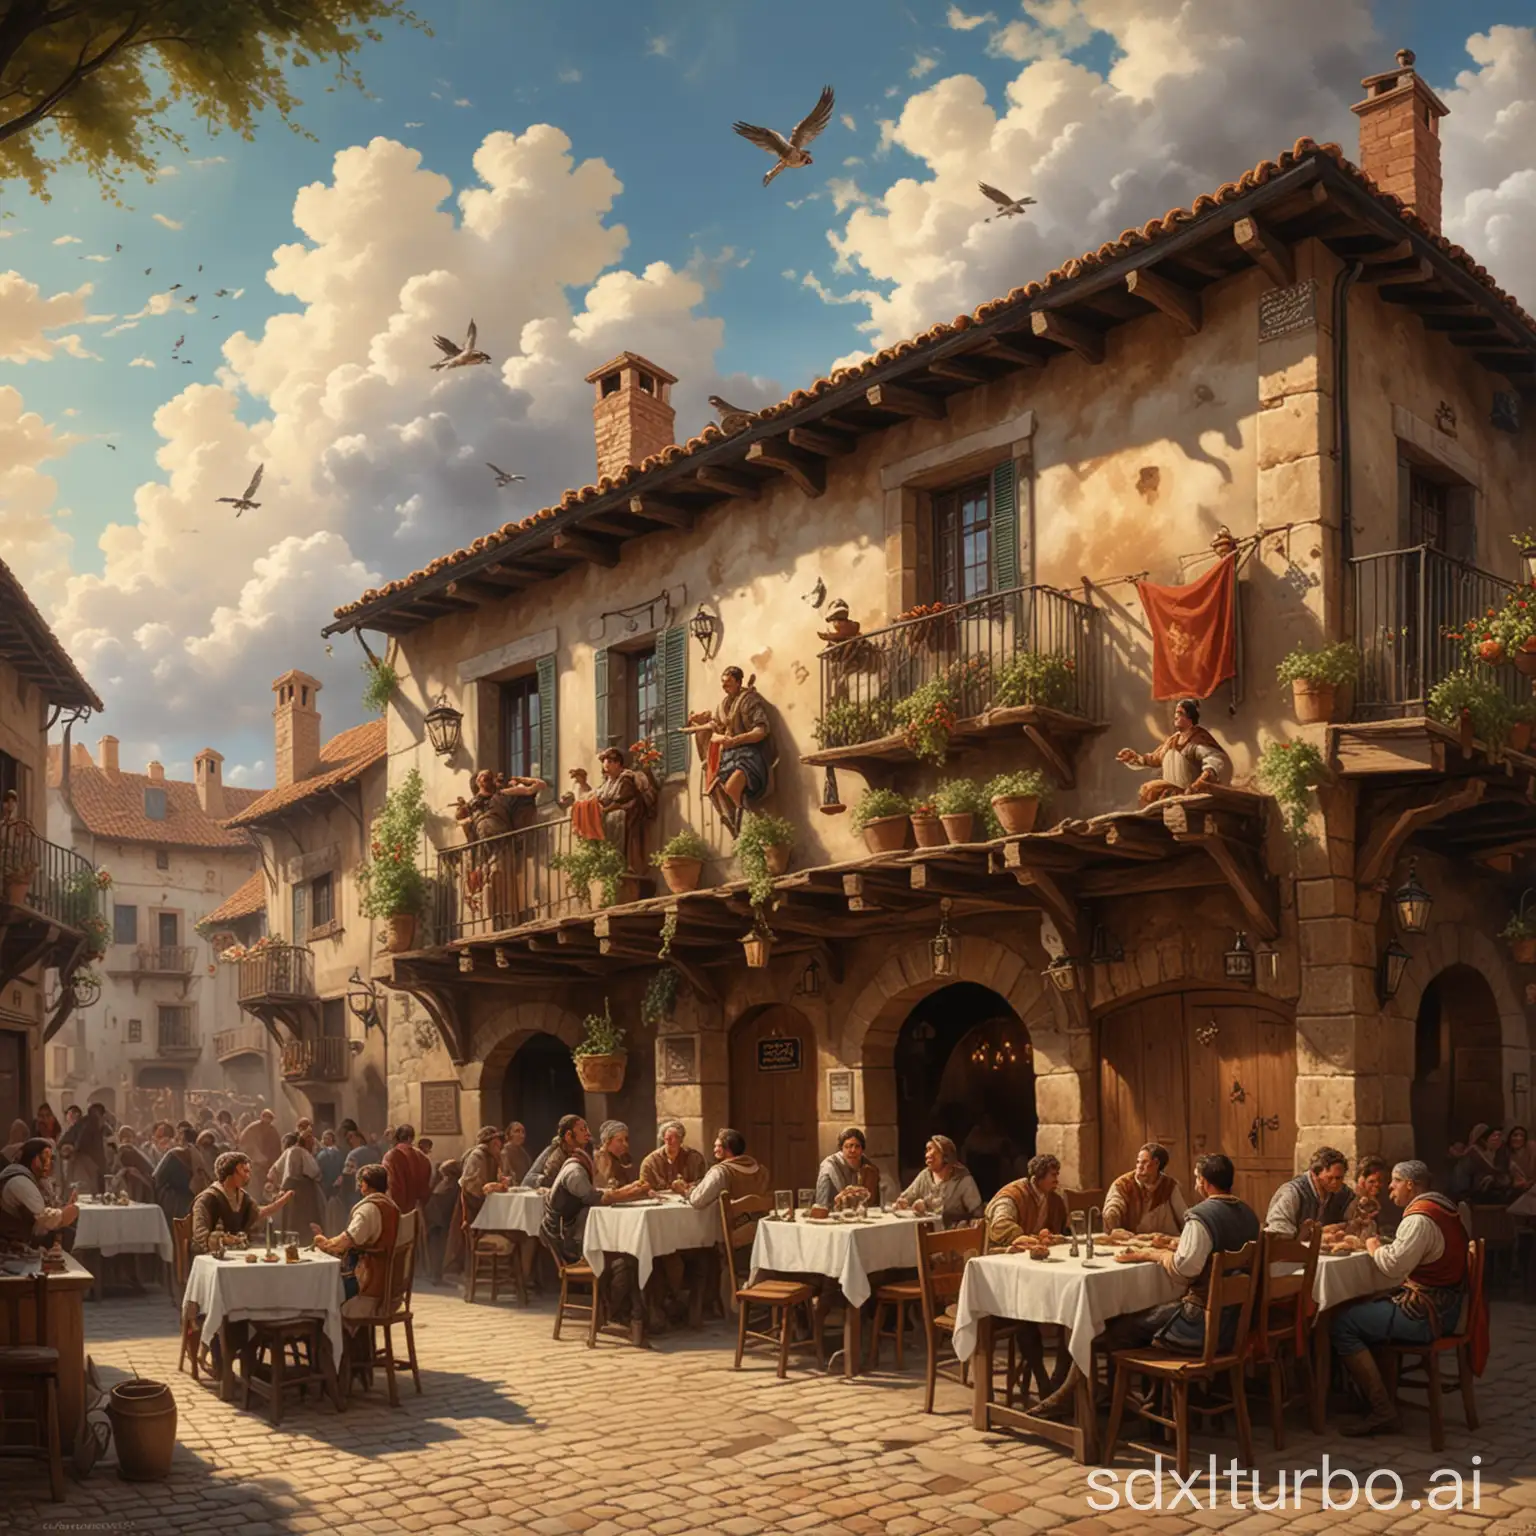 Medieval-Spanish-Tavern-Celebration-14thCentury-Painting-Style